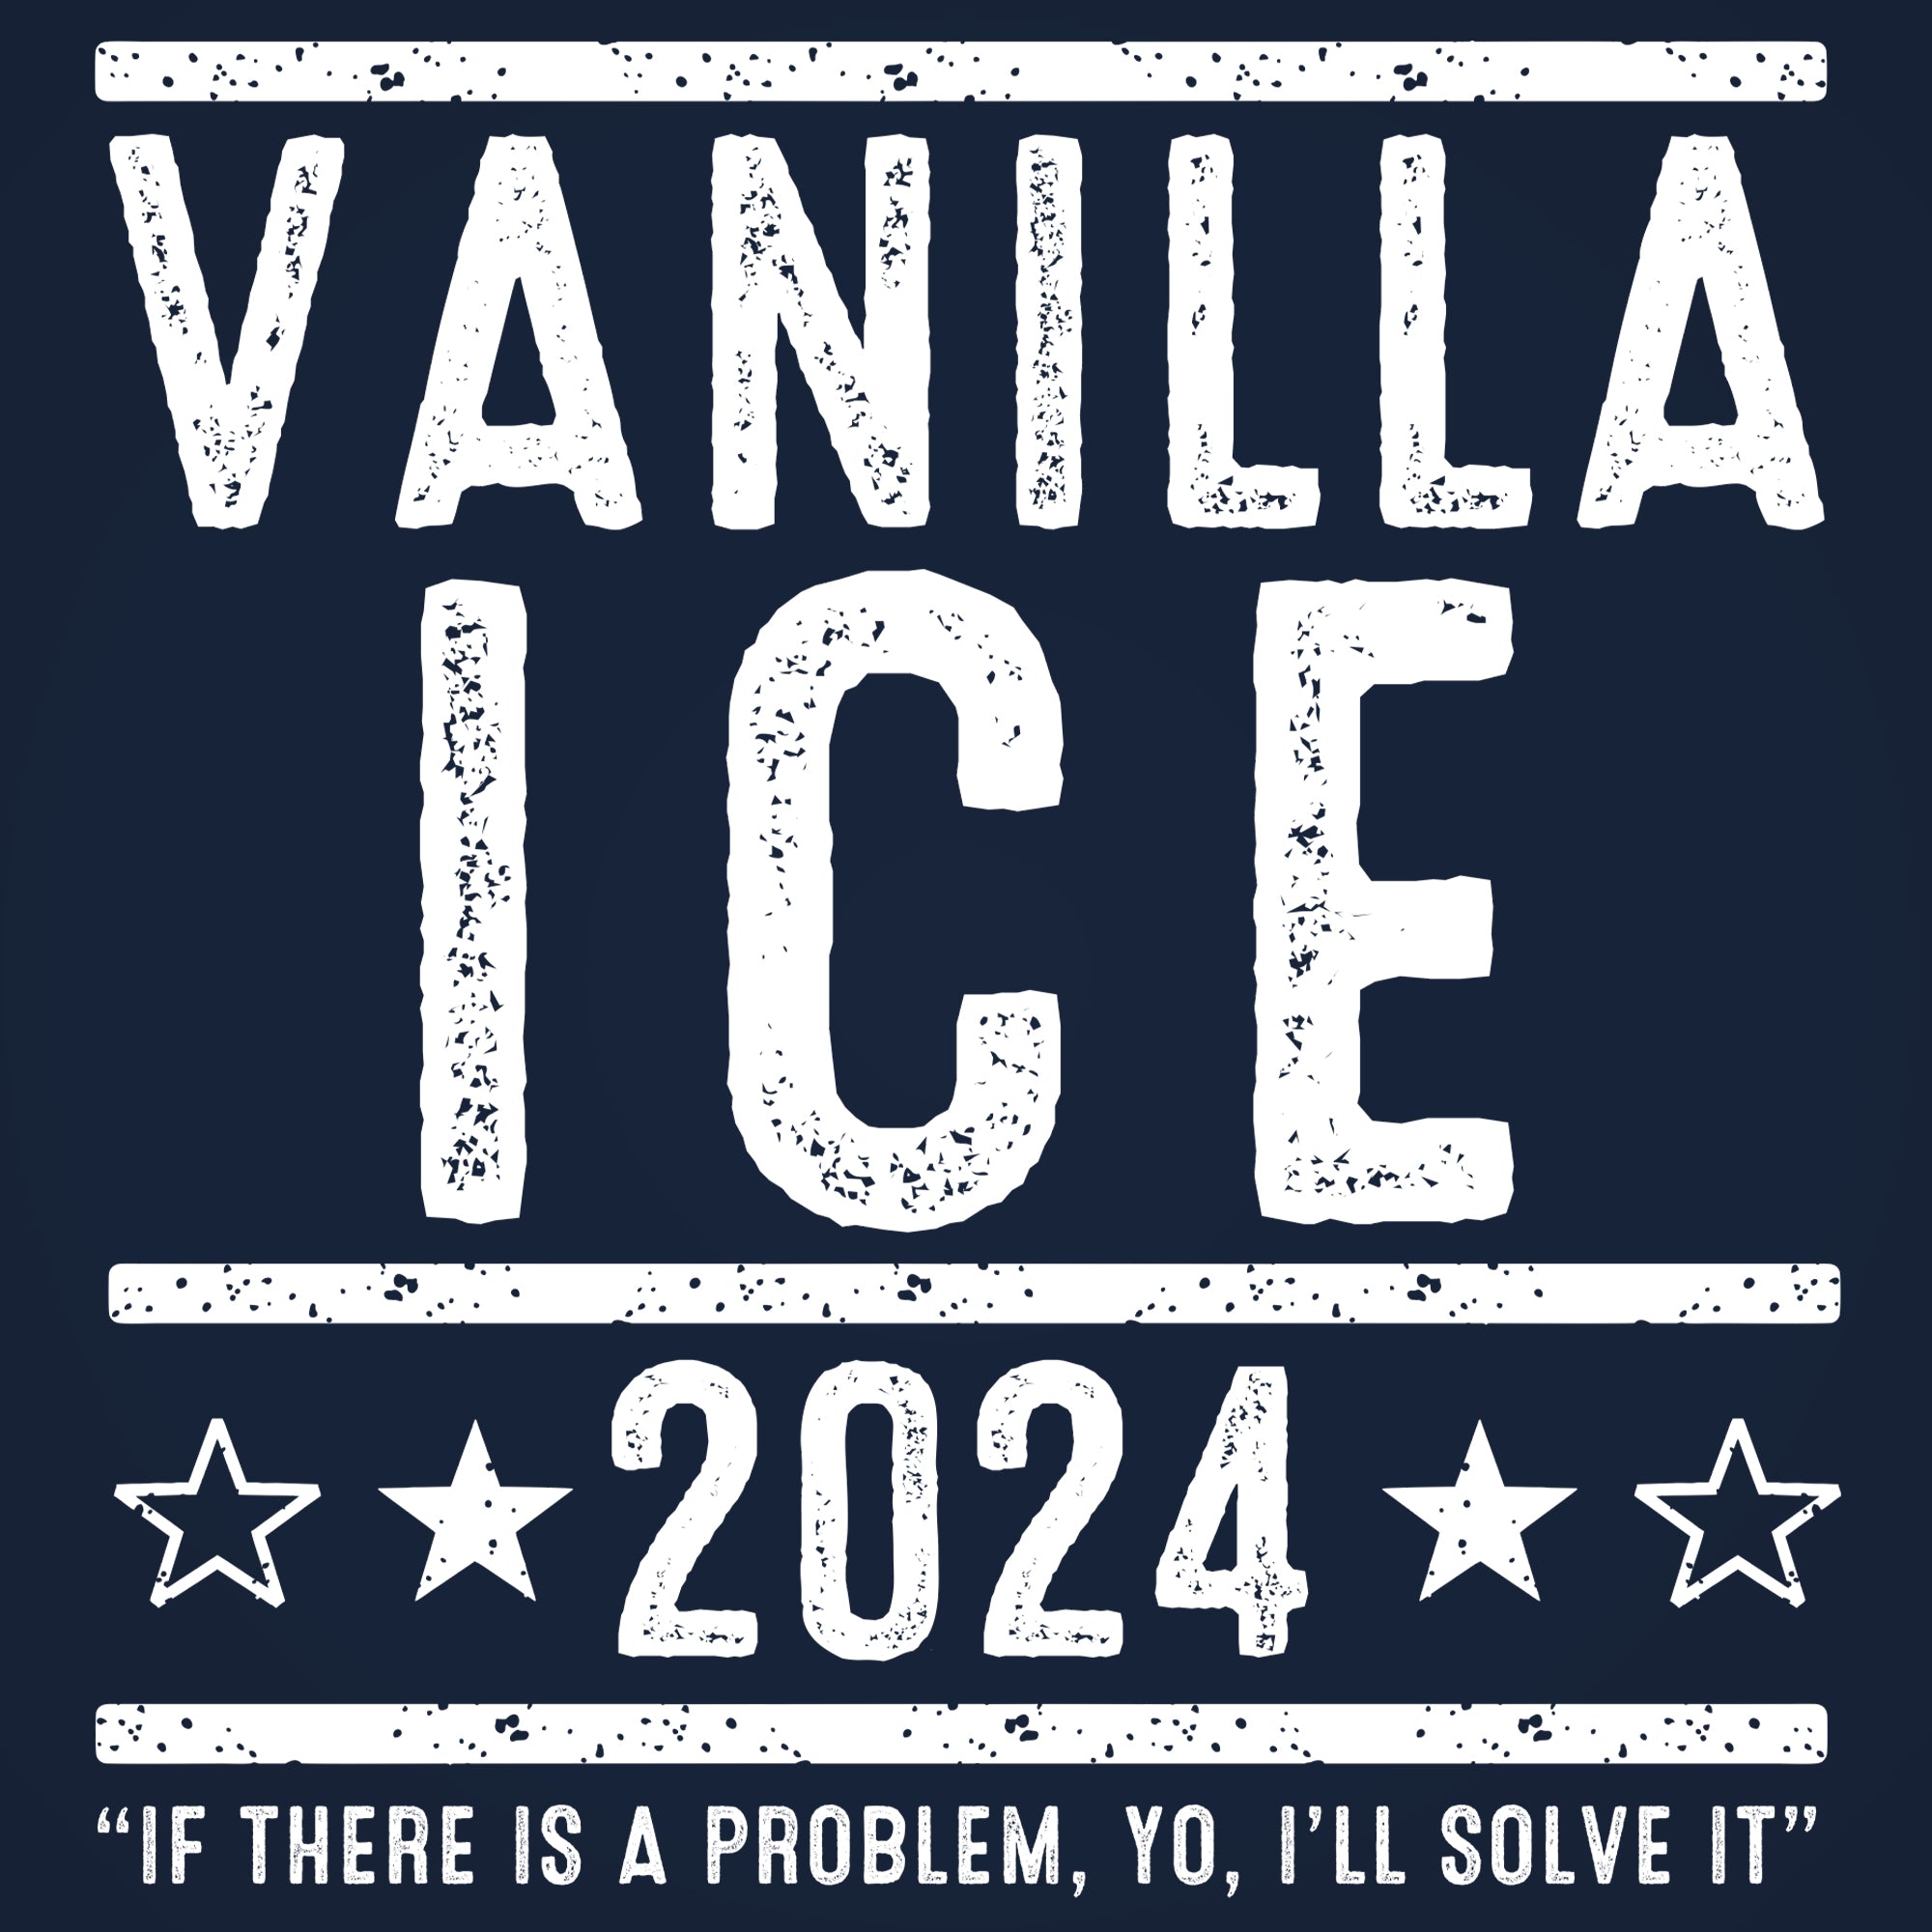 Vanilla Ice 2024 Election Tshirt - Donkey Tees